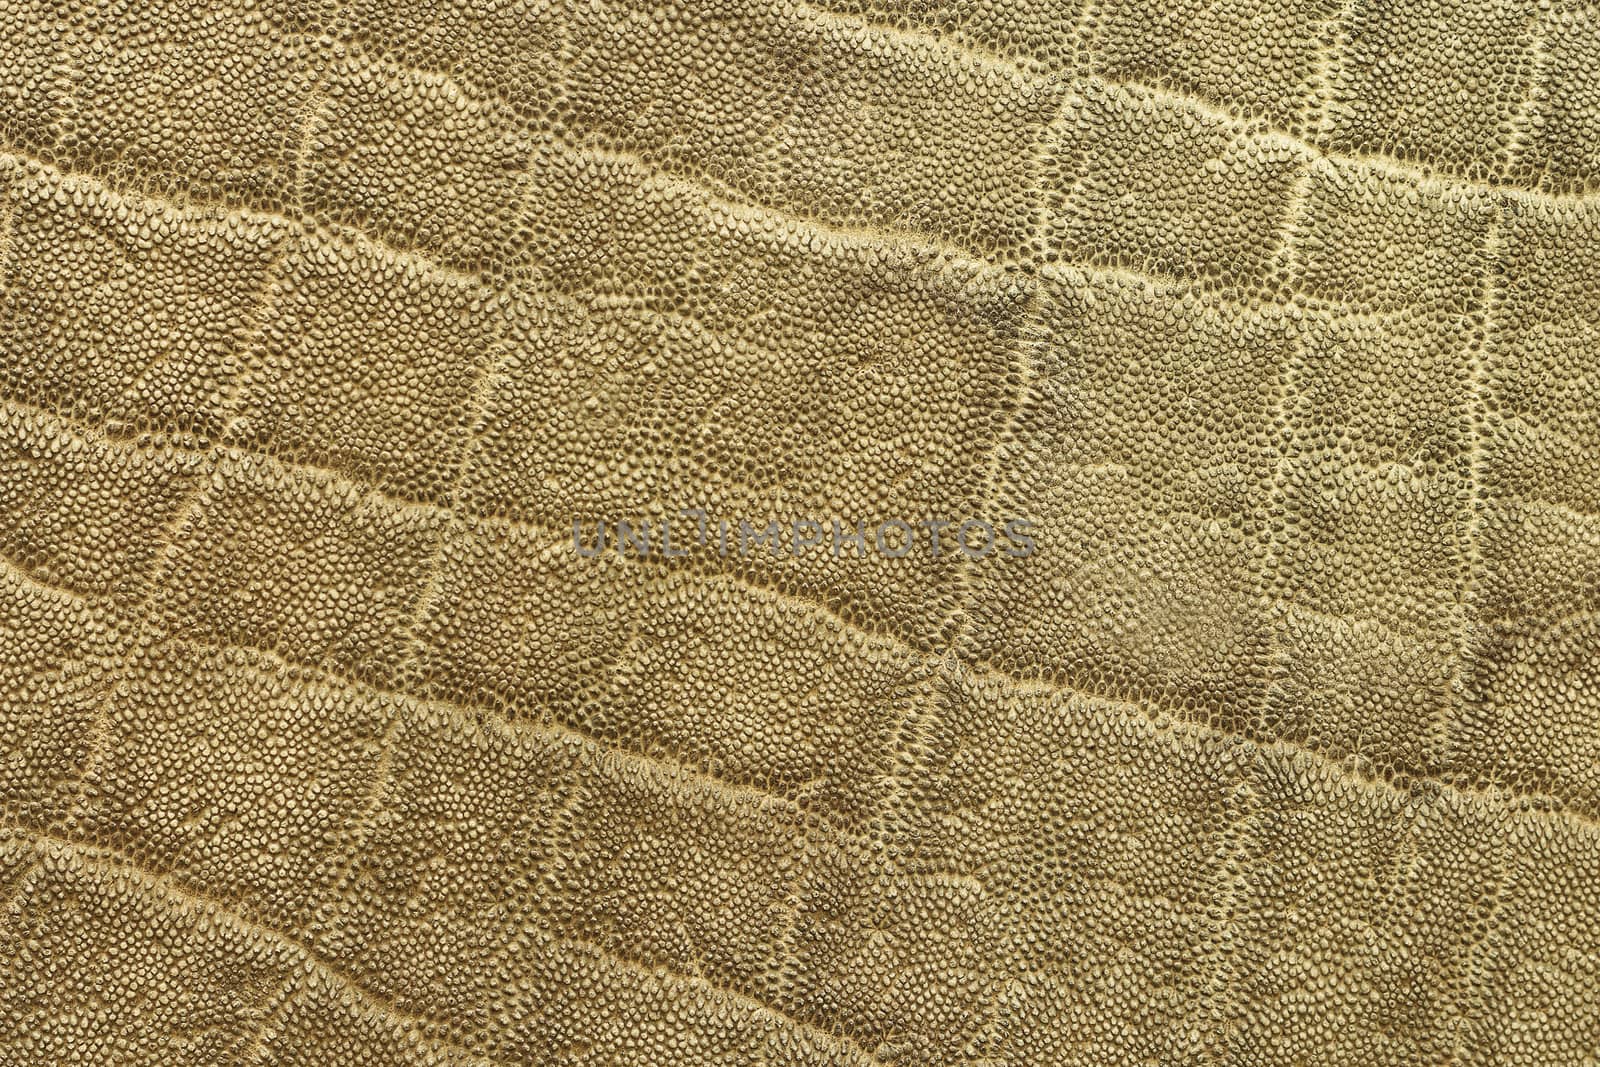 textured detail of african elephant pelt ( Loxodonta adaurora )